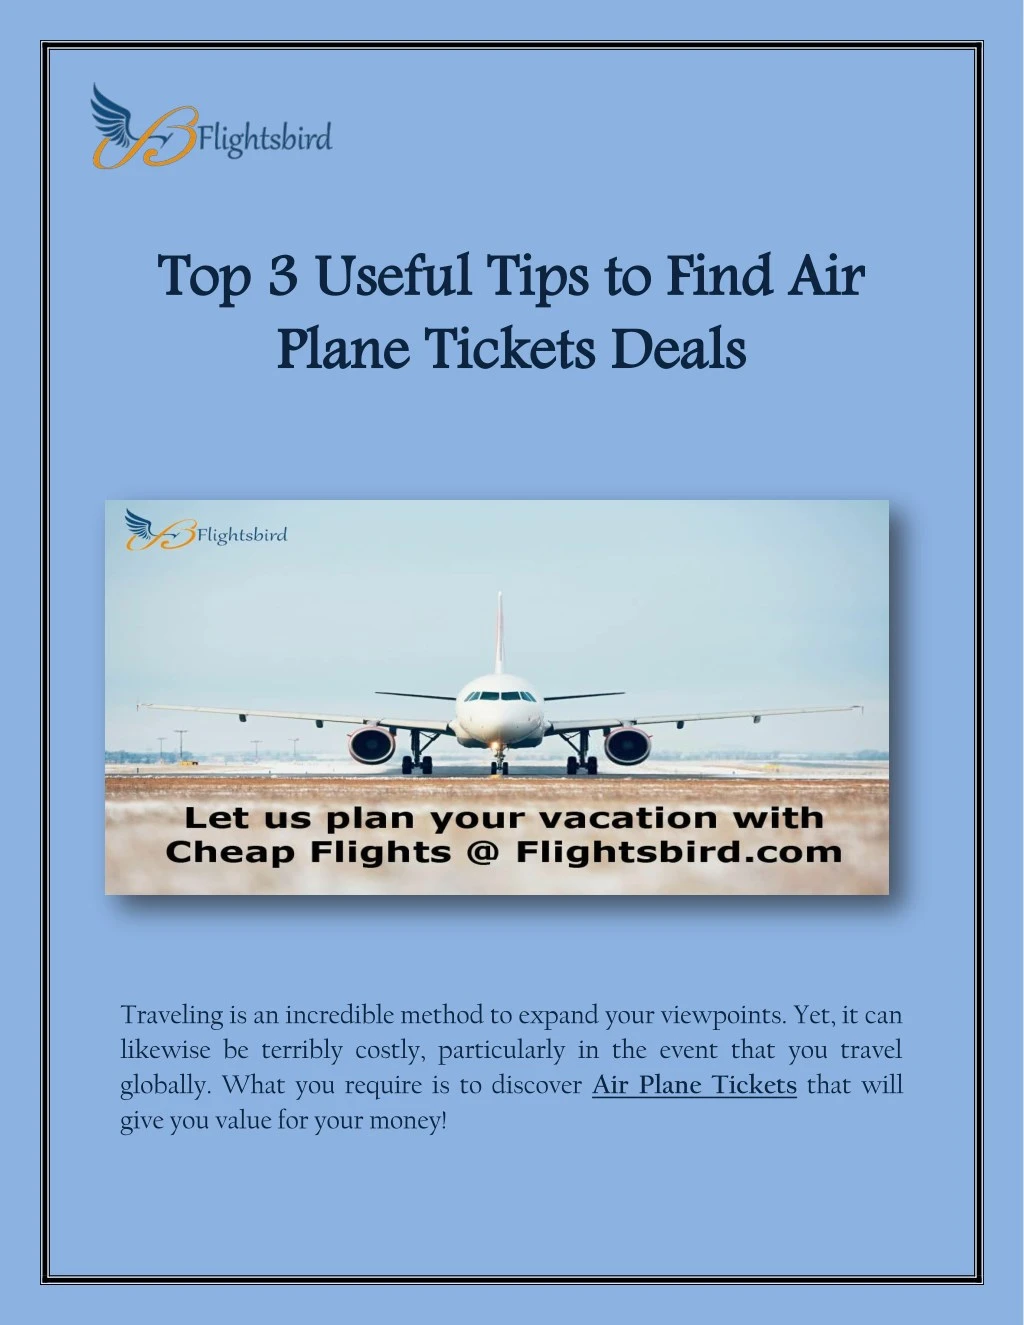 top 3 top 3 useful useful tips to f plane plane